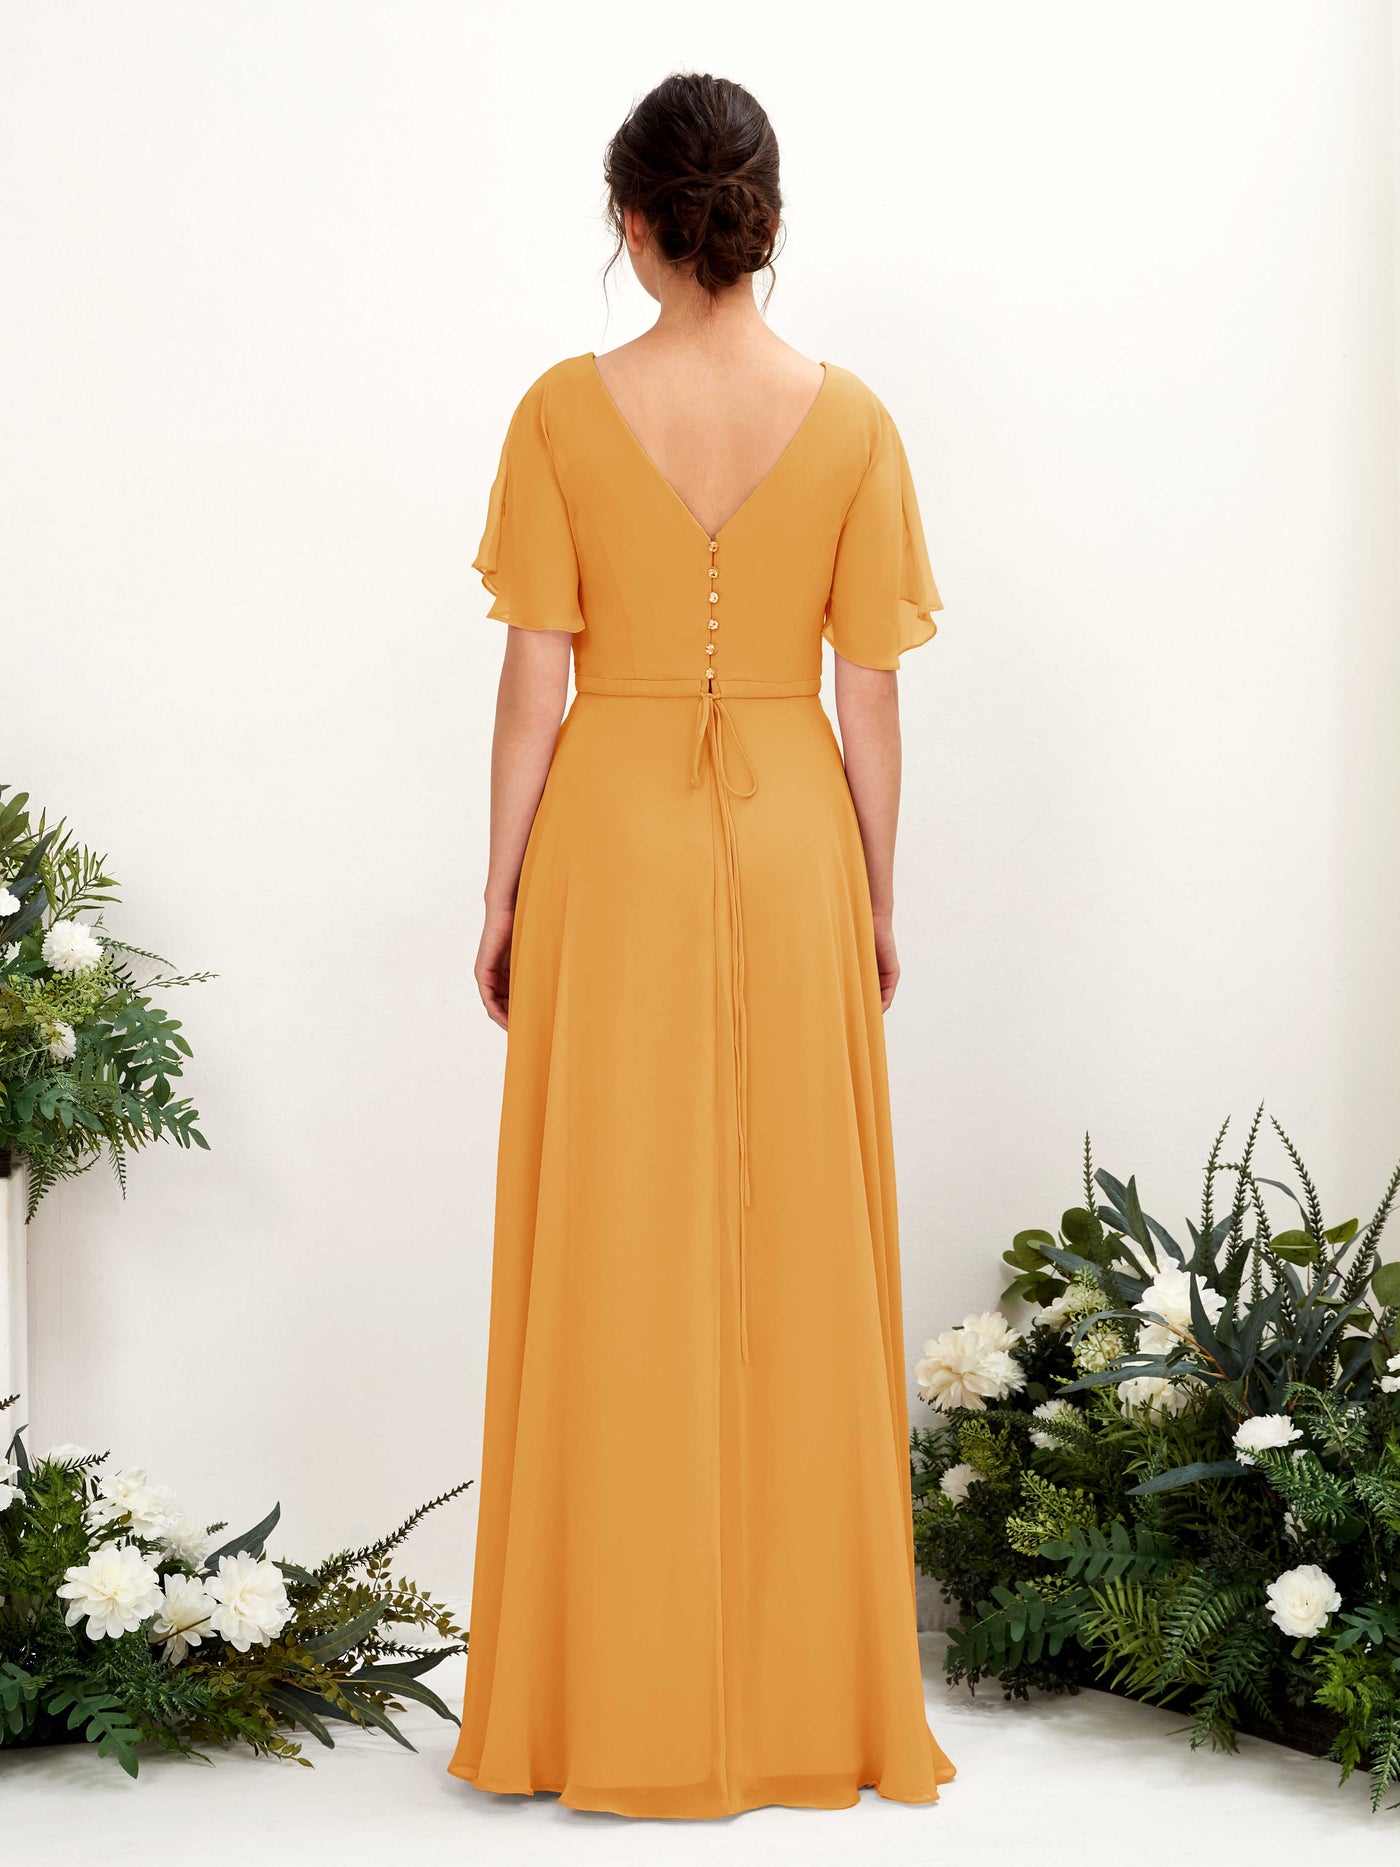 Mango Bridesmaid Dresses Bridesmaid Dress A-line Chiffon V-neck Full Length Short Sleeves Wedding Party Dress (81224602)#color_mango